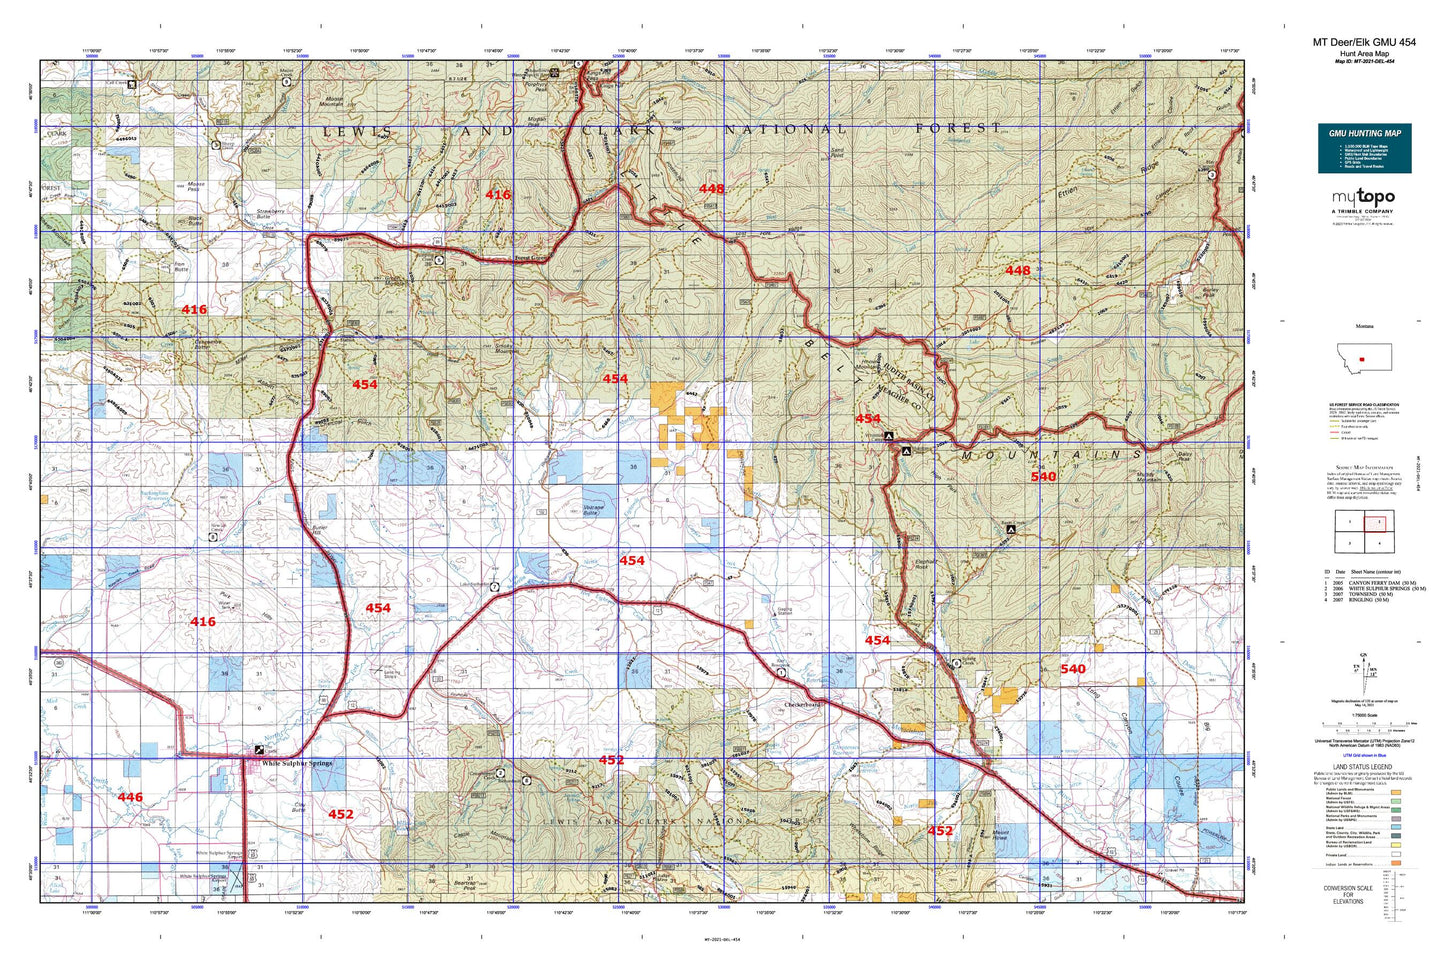 Montana Deer/Elk GMU 454 Map Image